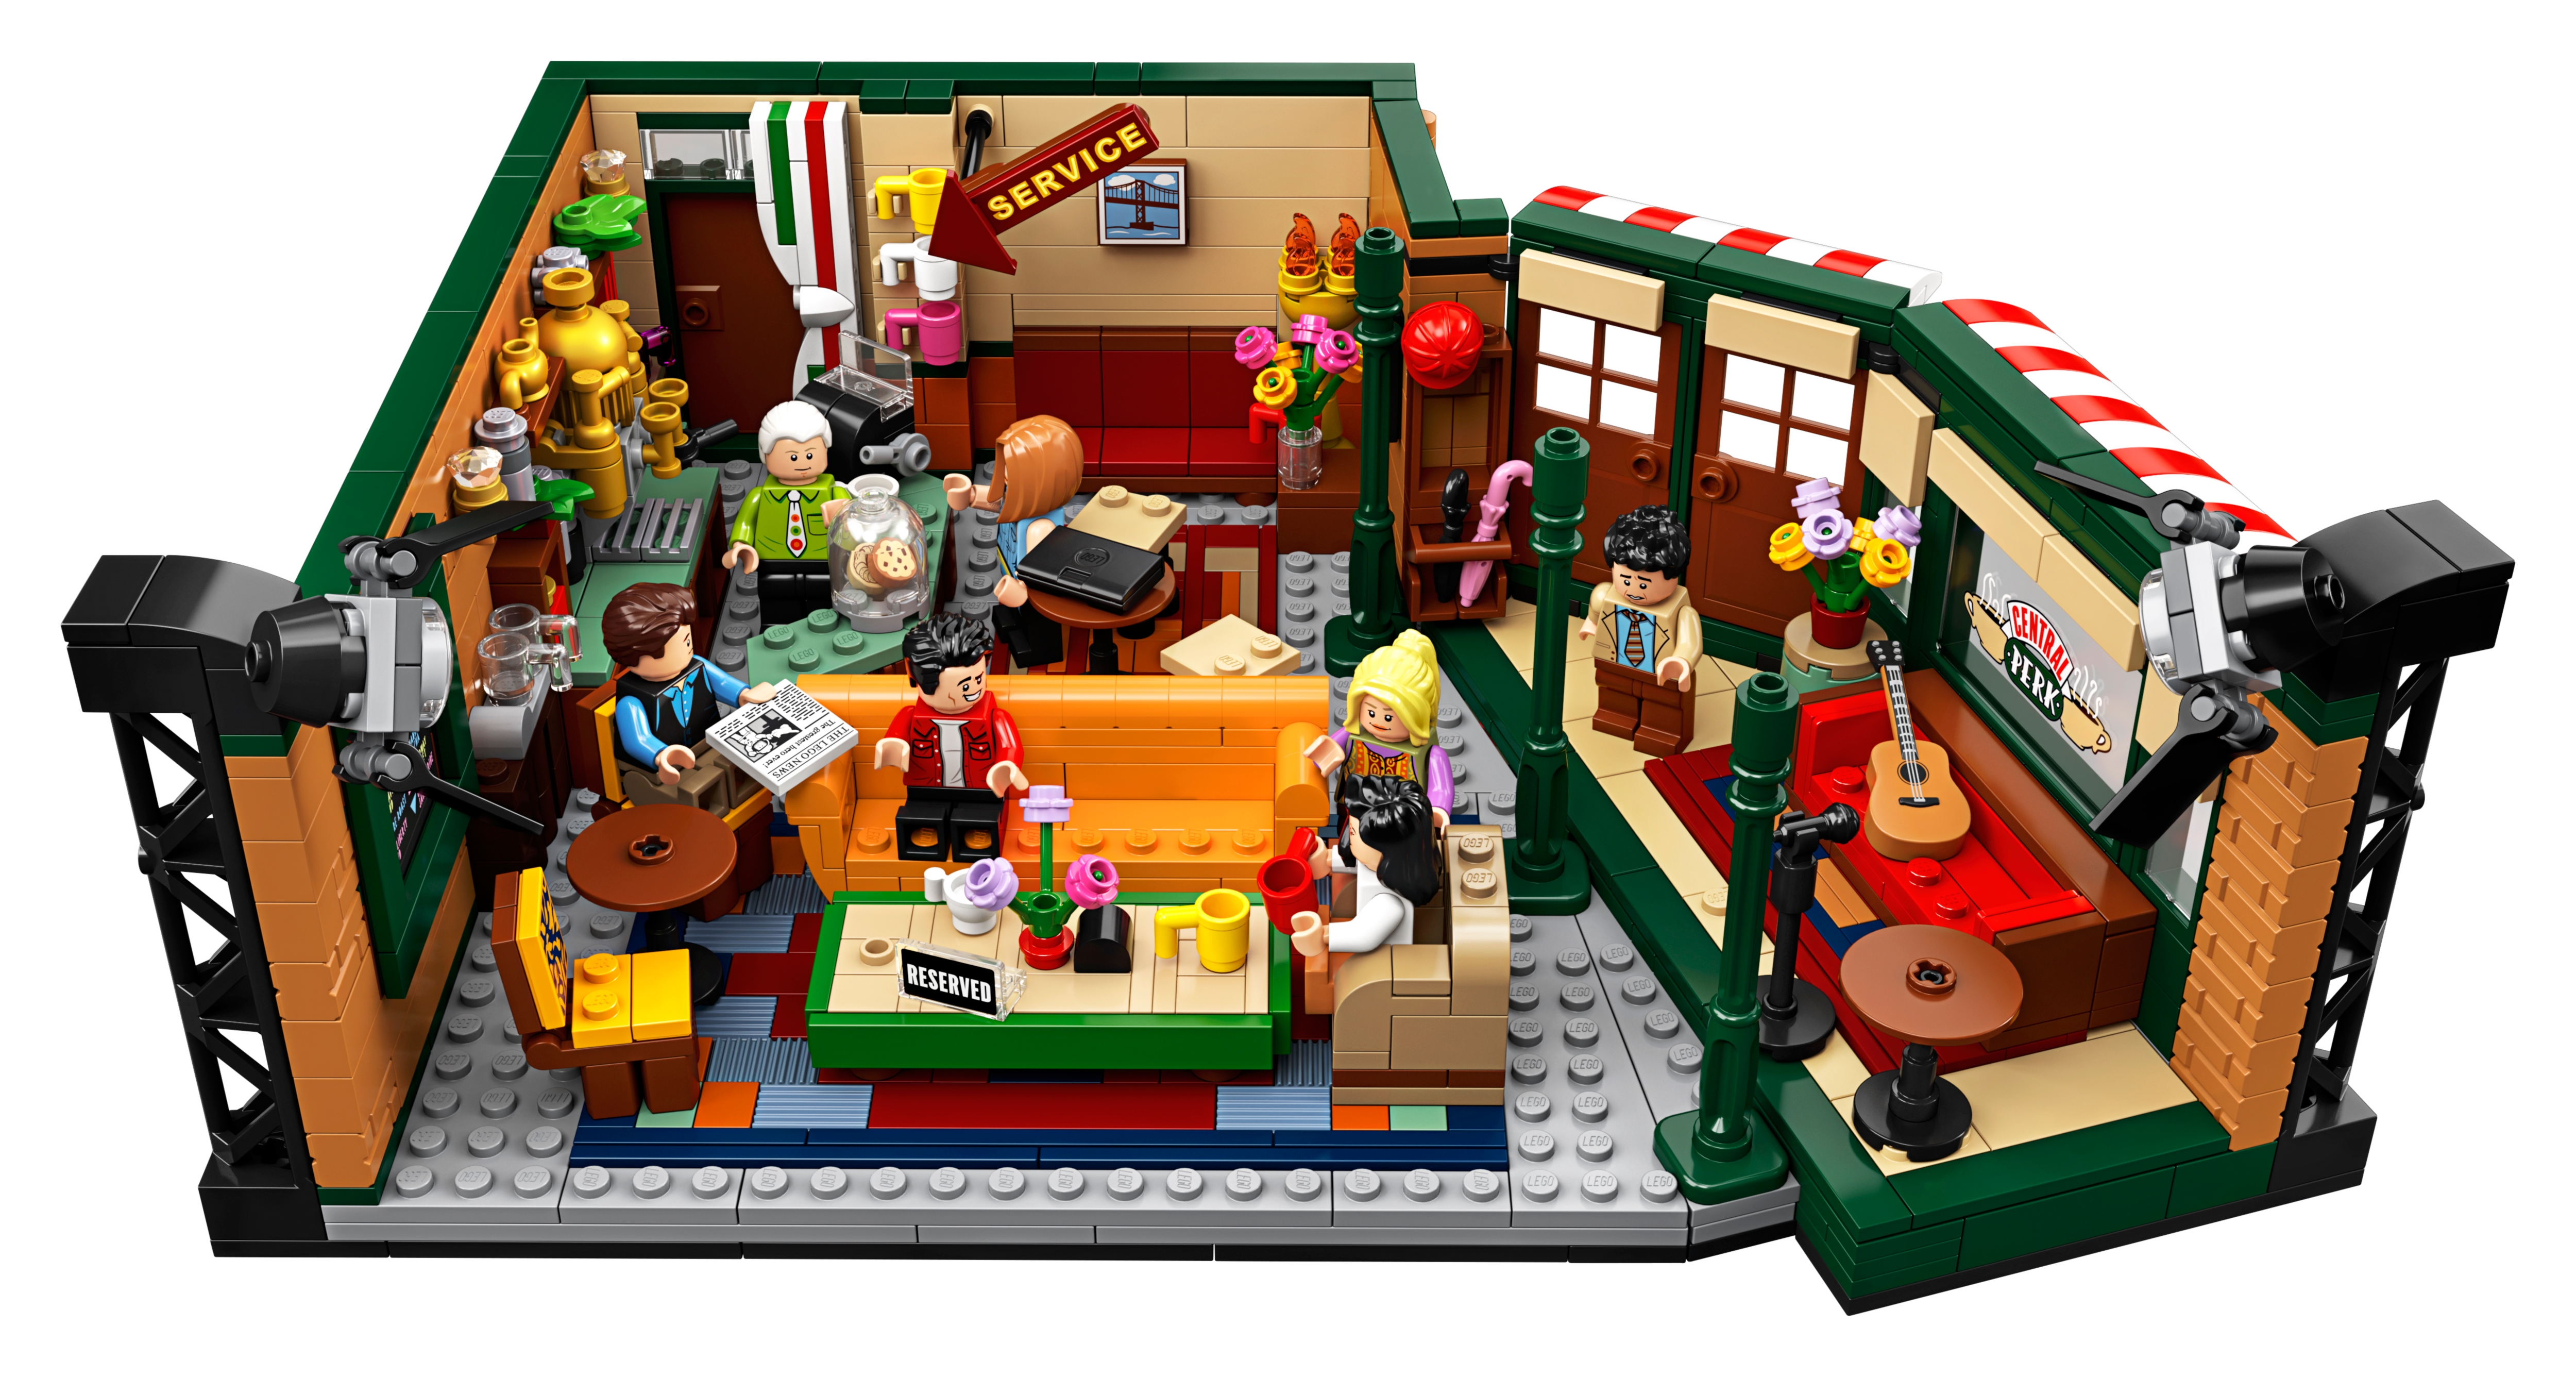 Details about   LEGO FRIENDS Central Perk Ideas set 21319 US Seller new comes 7 mini figures